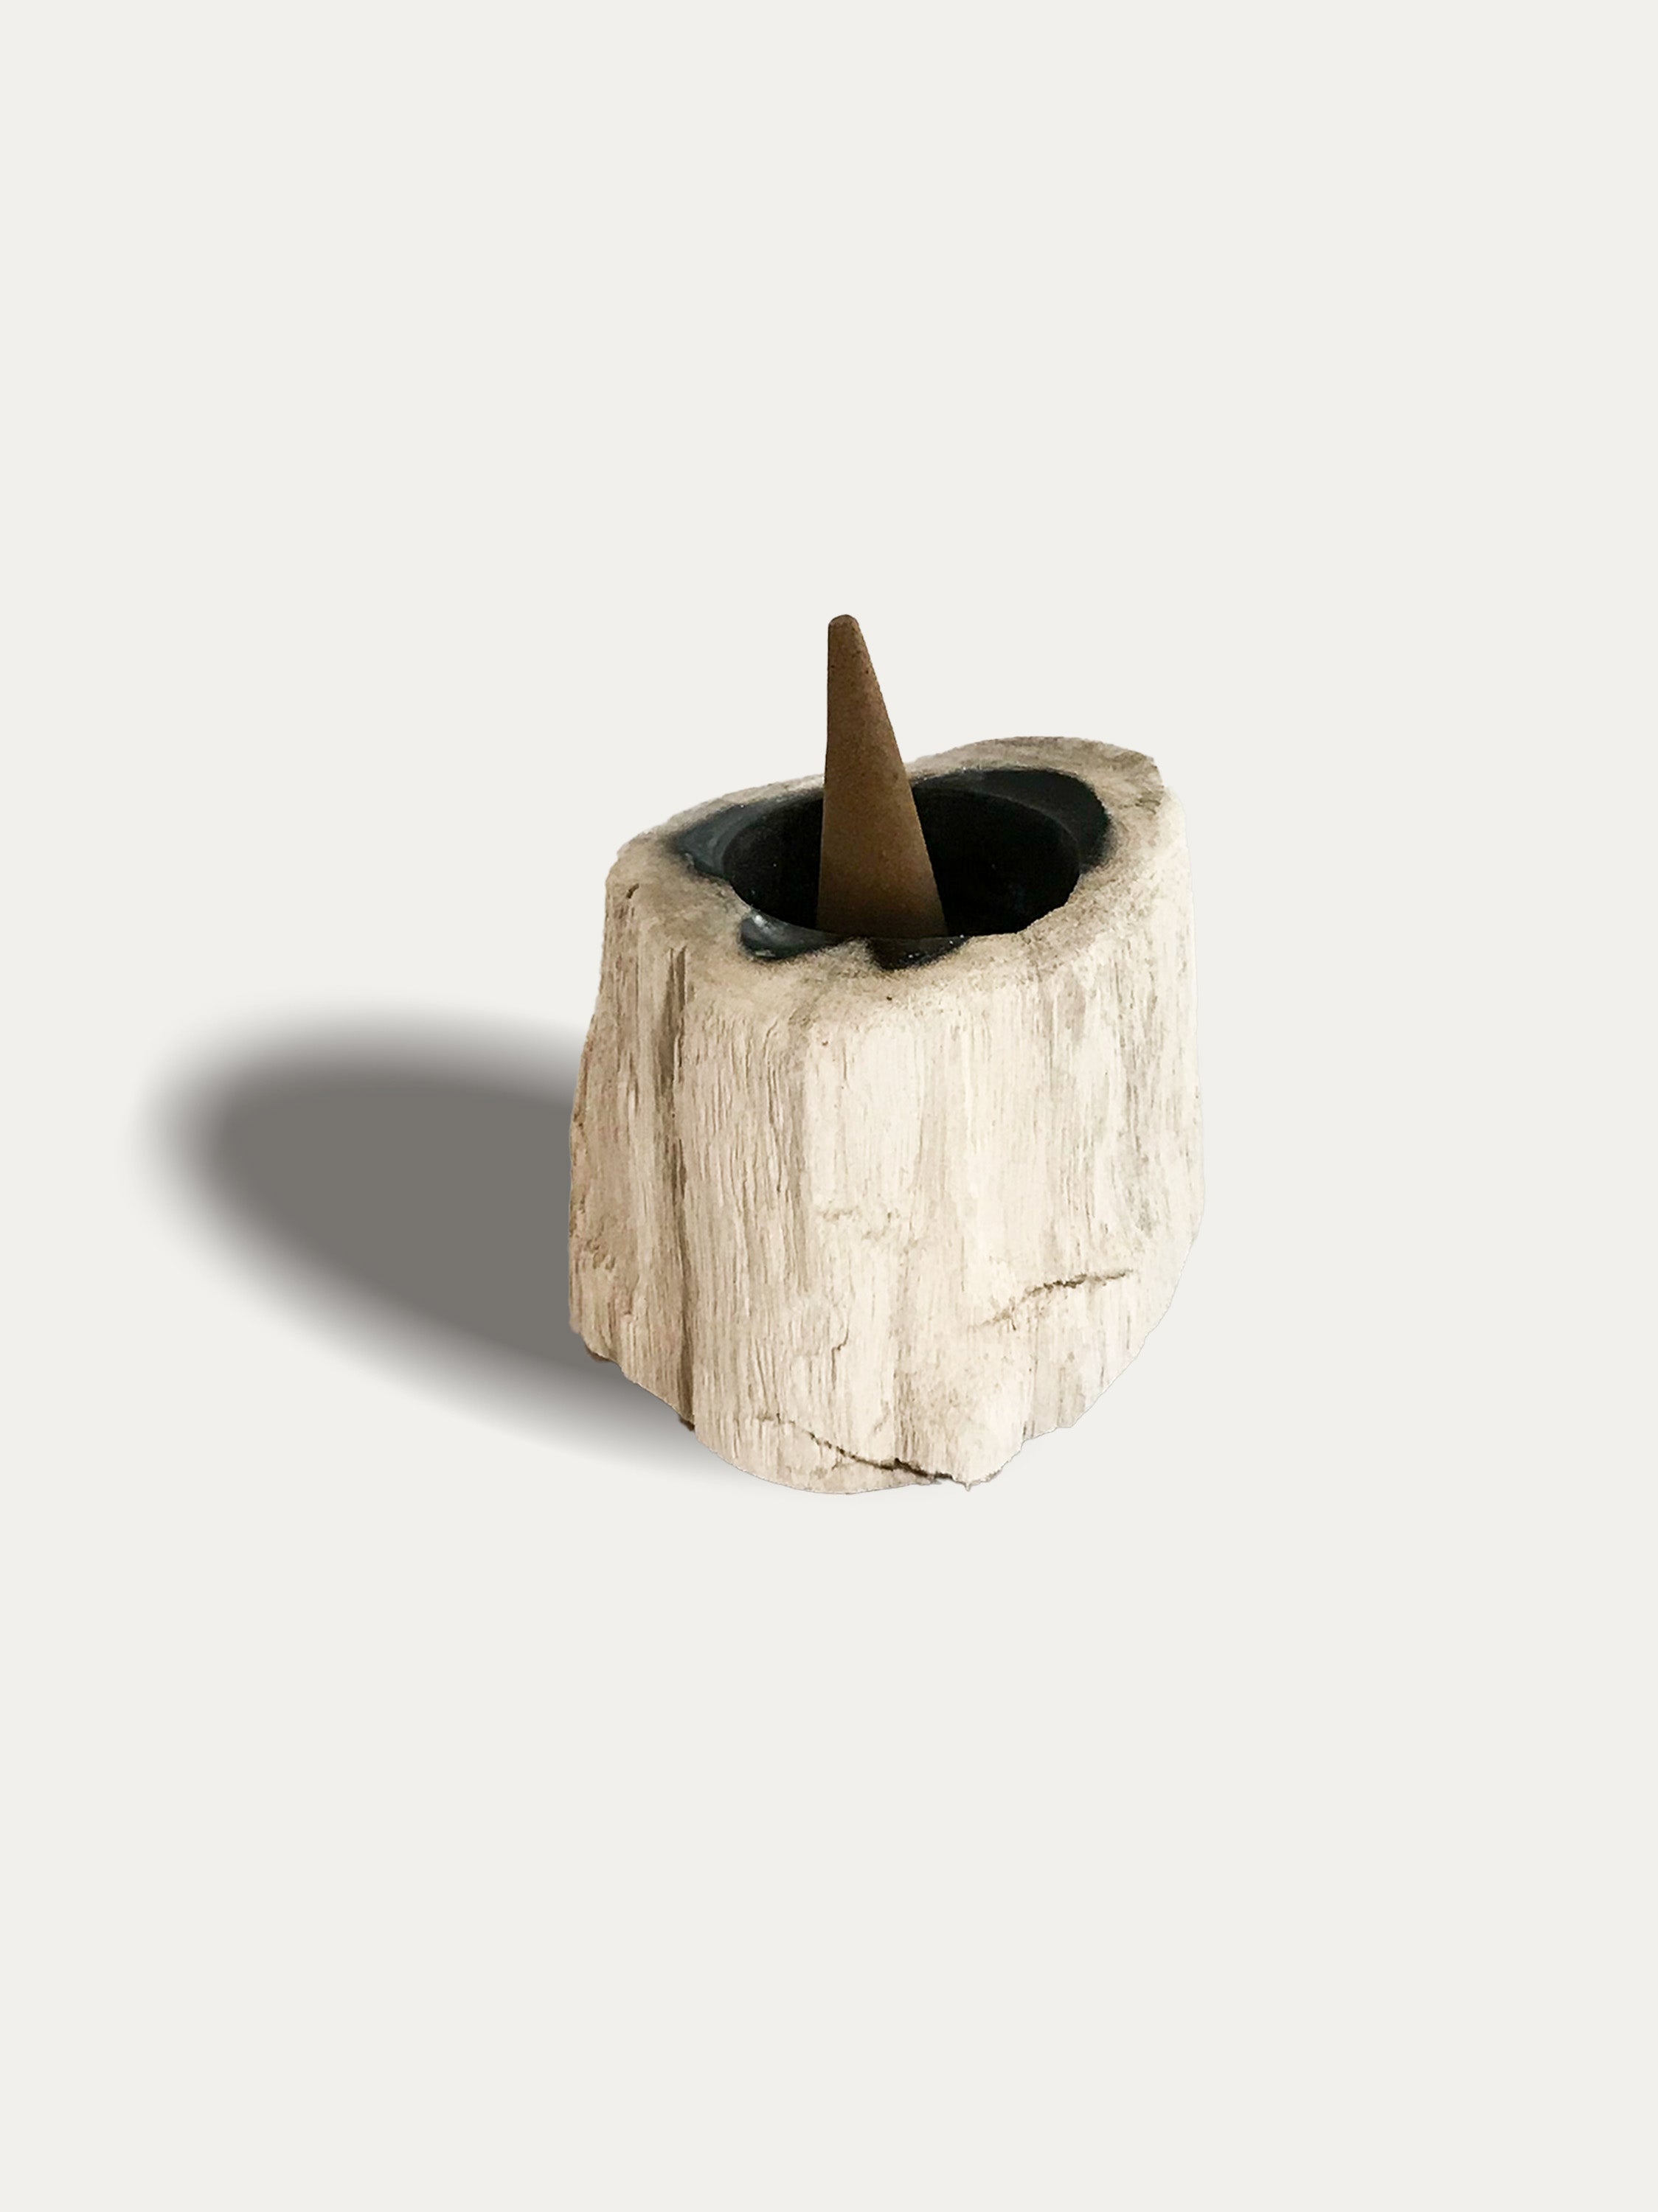 Petrified wood candle holders, porta candele in legno fossile